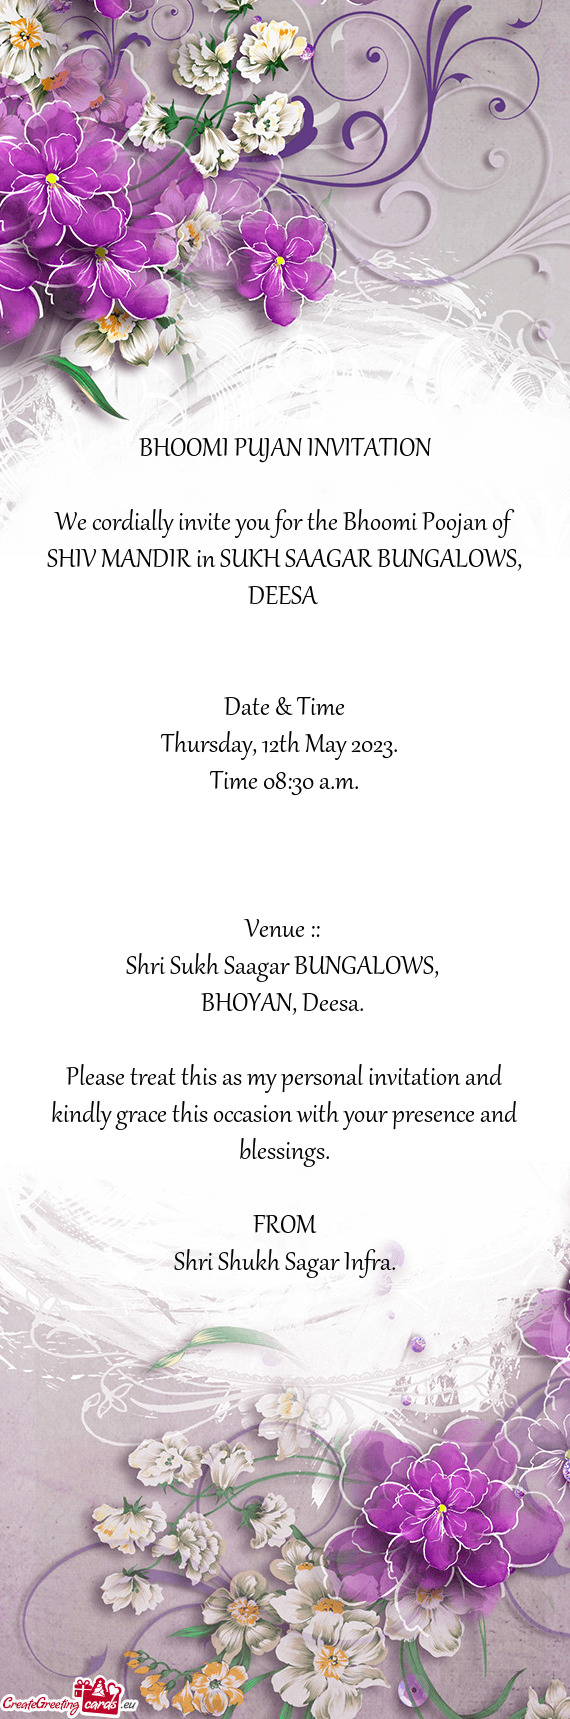 We cordially invite you for the Bhoomi Poojan of SHIV MANDIR in SUKH SAAGAR BUNGALOWS, DEESA